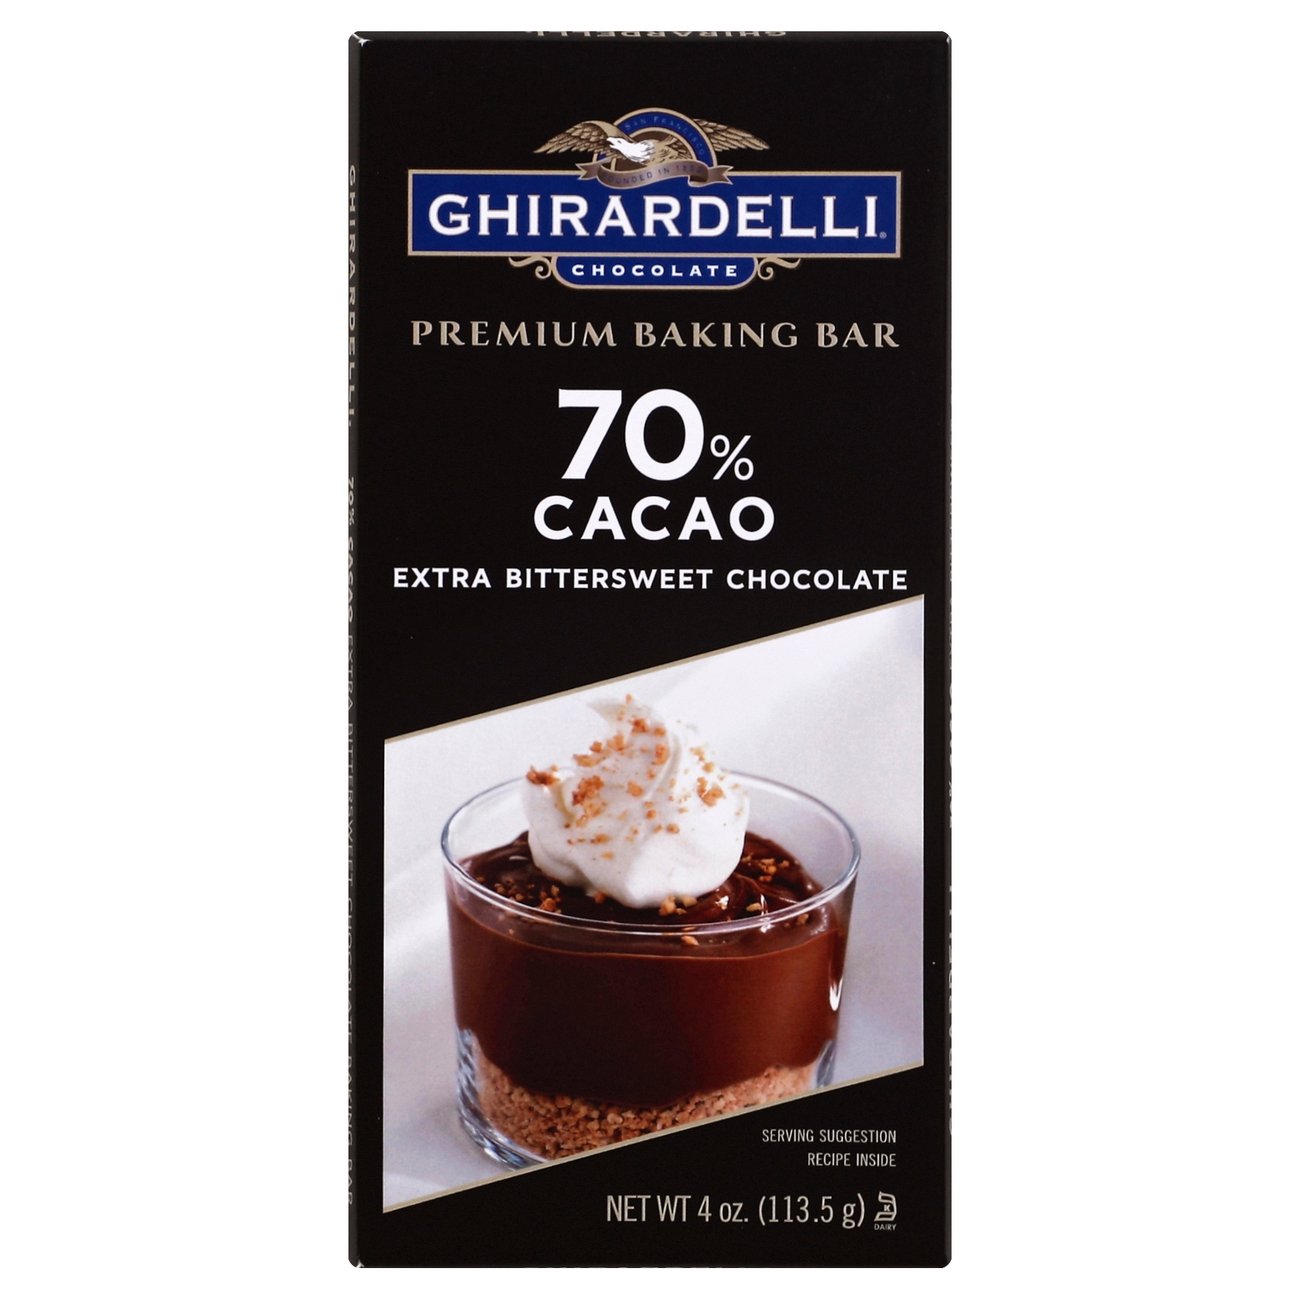 Sarotti For Gentlemen Premium Bittersweet Chocolate Bar, 3.5 oz